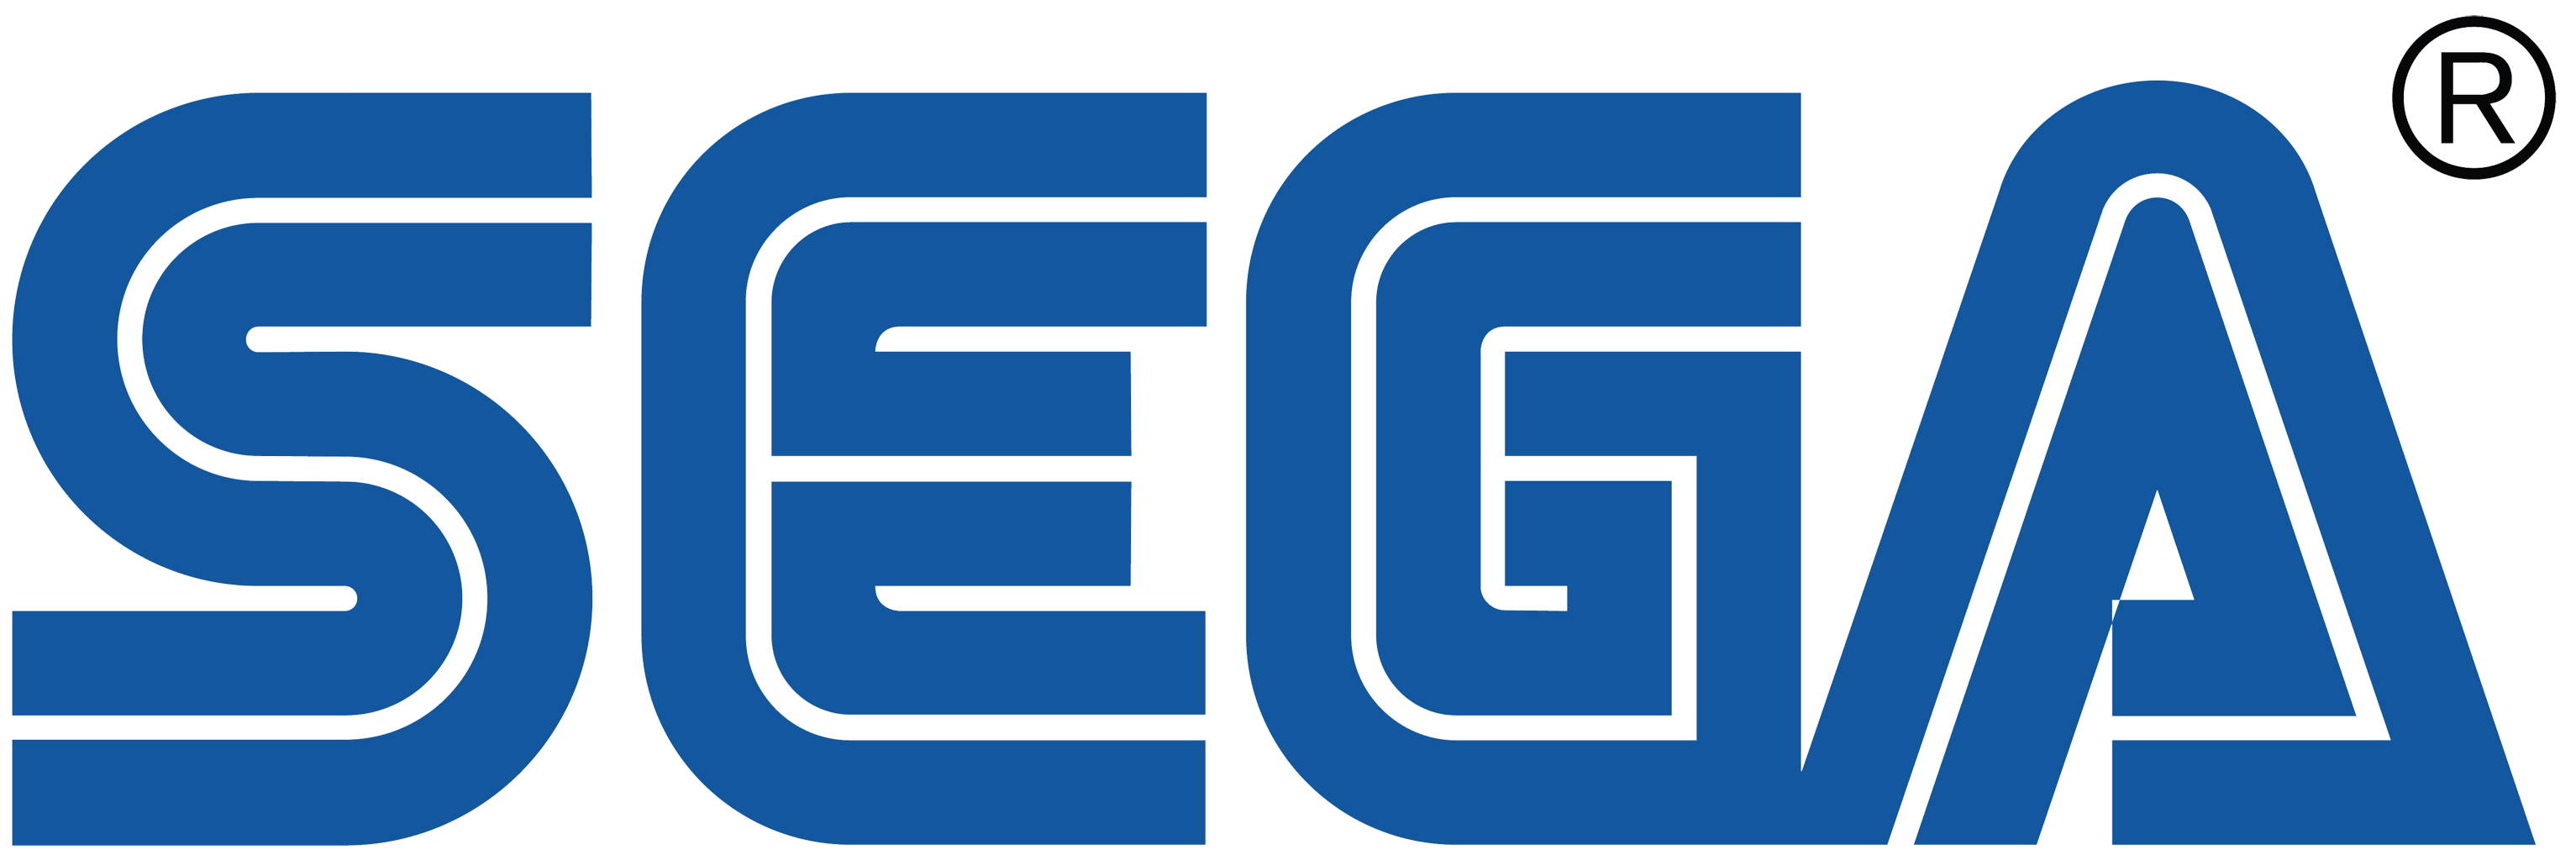 Sega Logo - File:SEGA logo.png - Wikimedia Commons